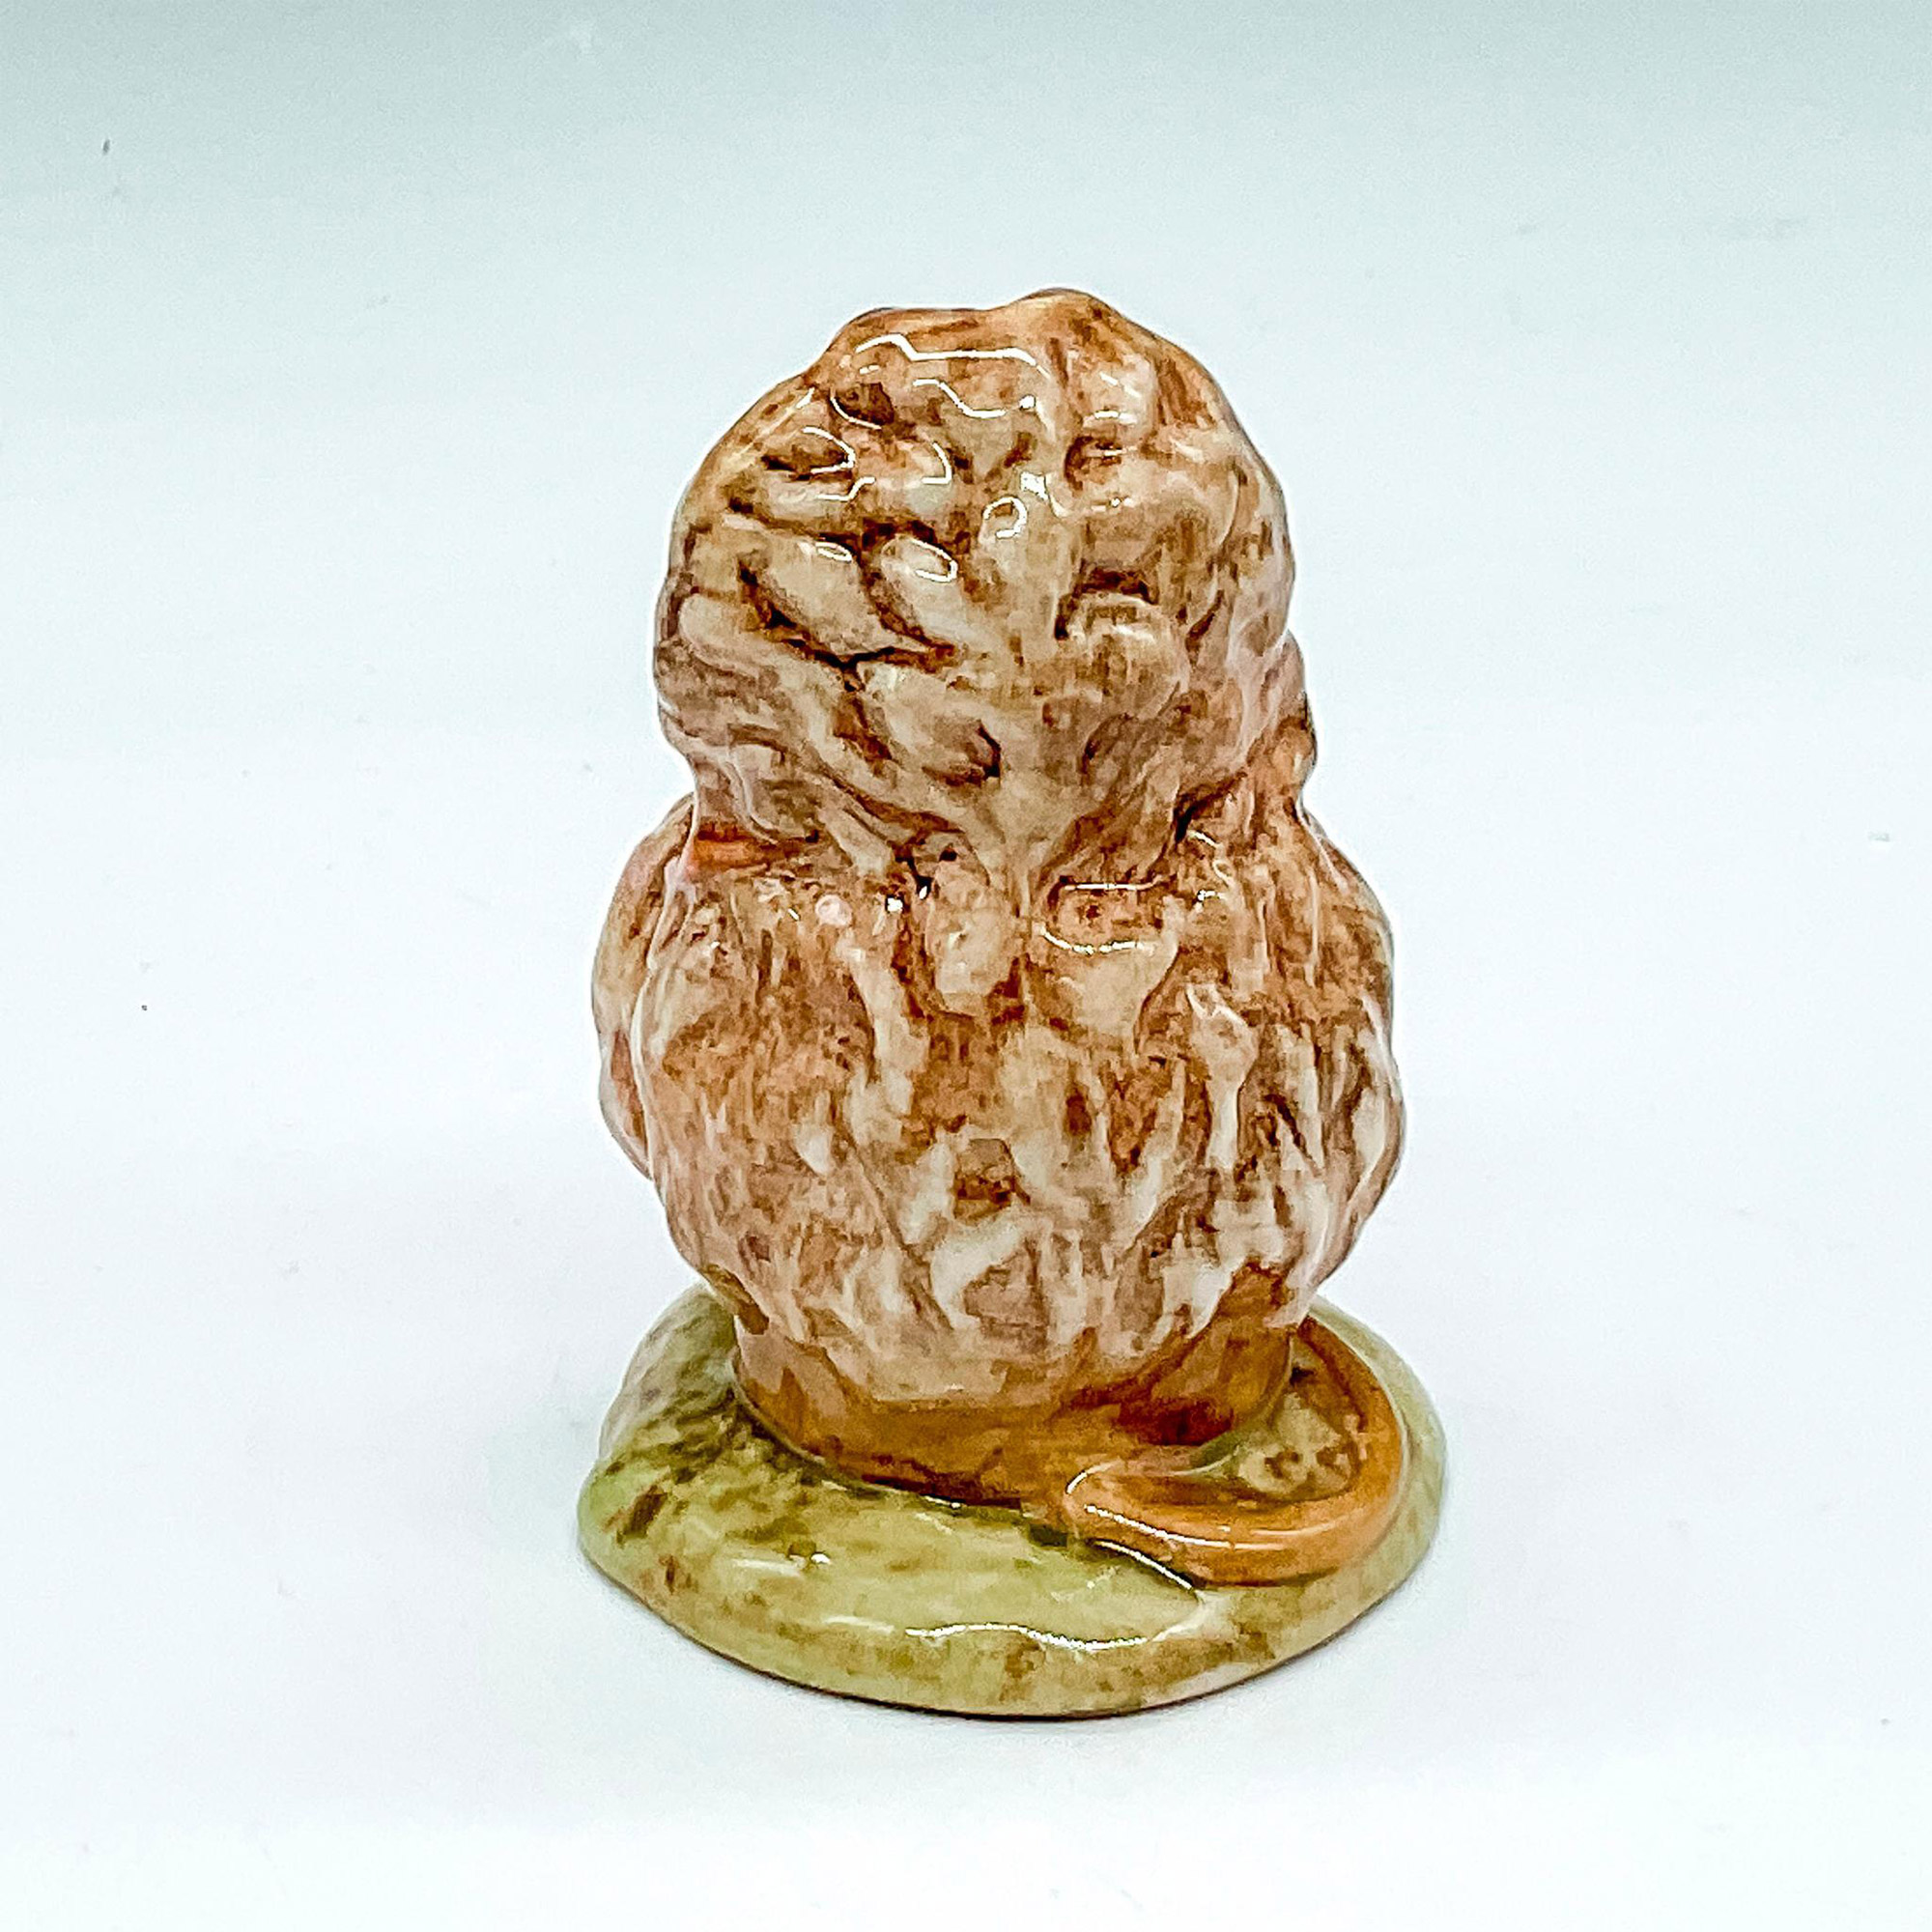 Royal Albert Beatrix Potter Figurine, Thomasina Tittlemouse - Image 2 of 3